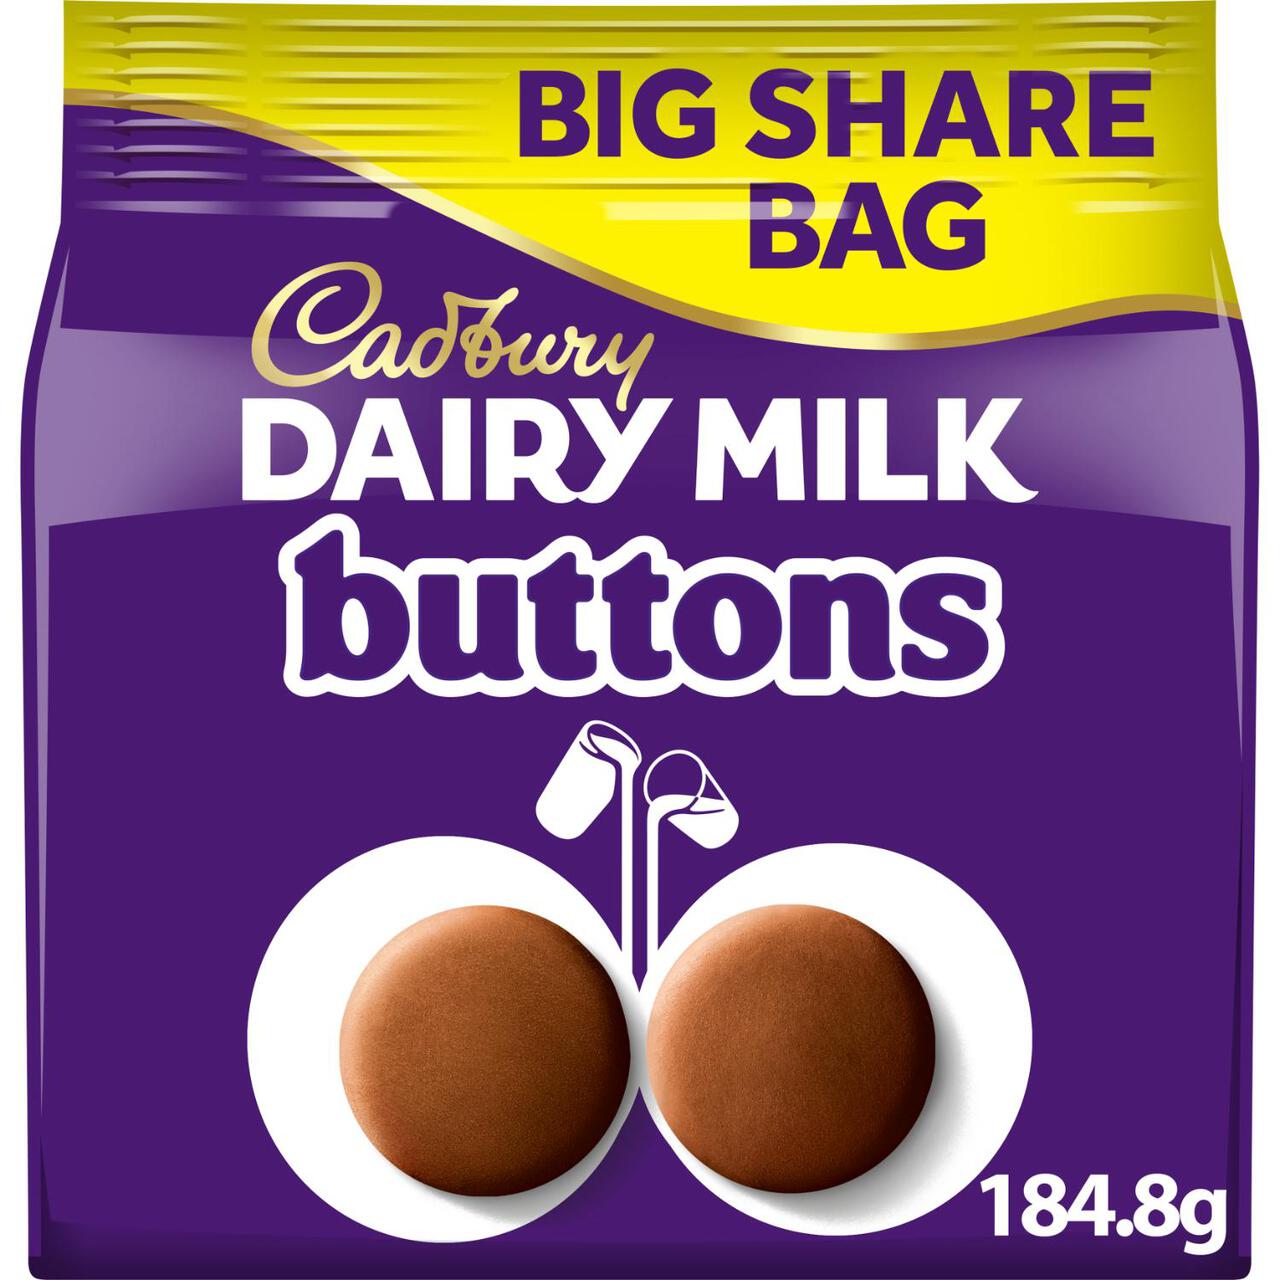 Cadbury Dairy Milk Giant Buttons Chocolate Big Share Bag 184.8g